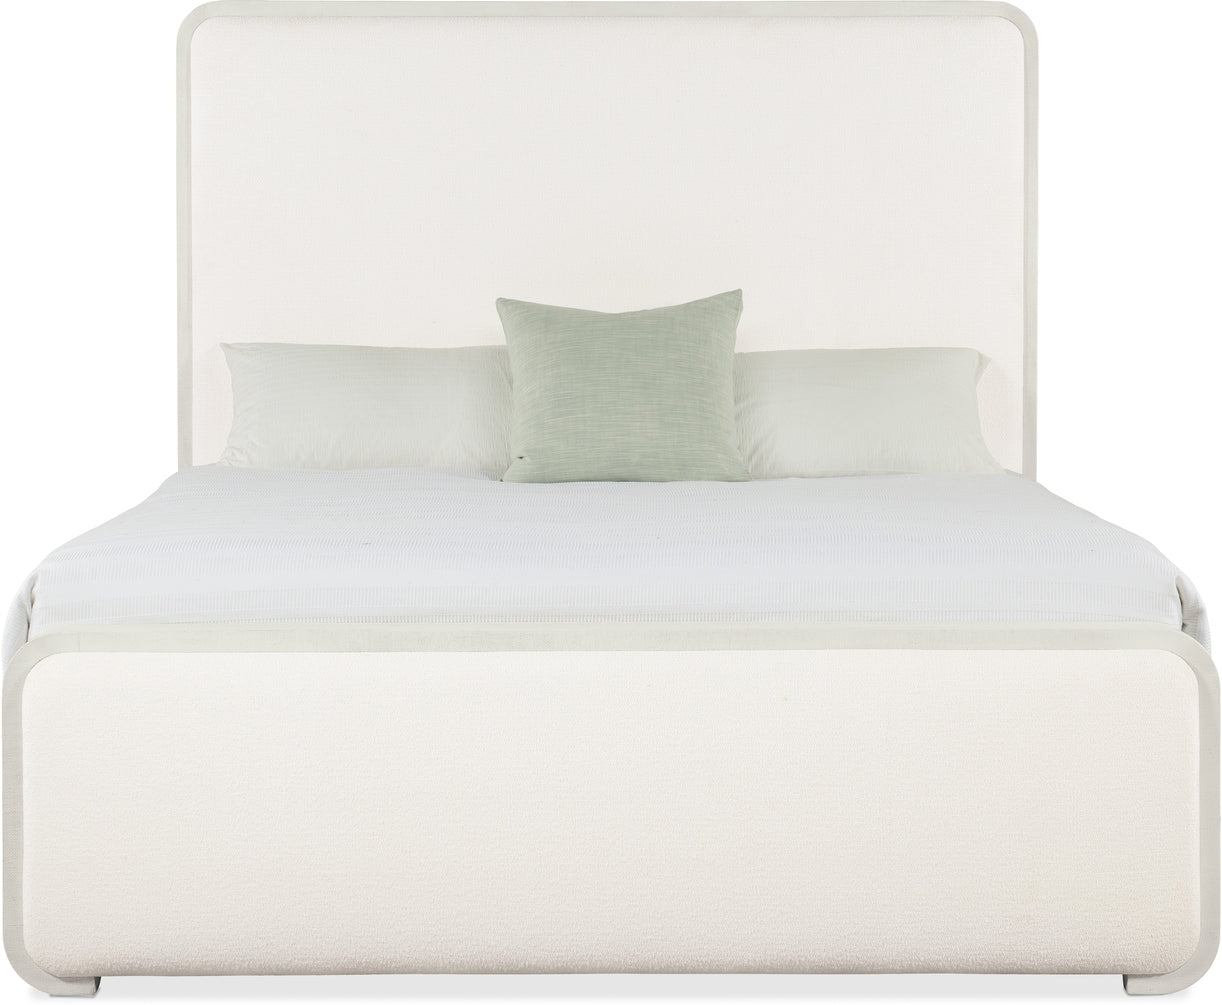 Hooker Furniture Bedroom Serenity Ashore Upholstered Panel Bed